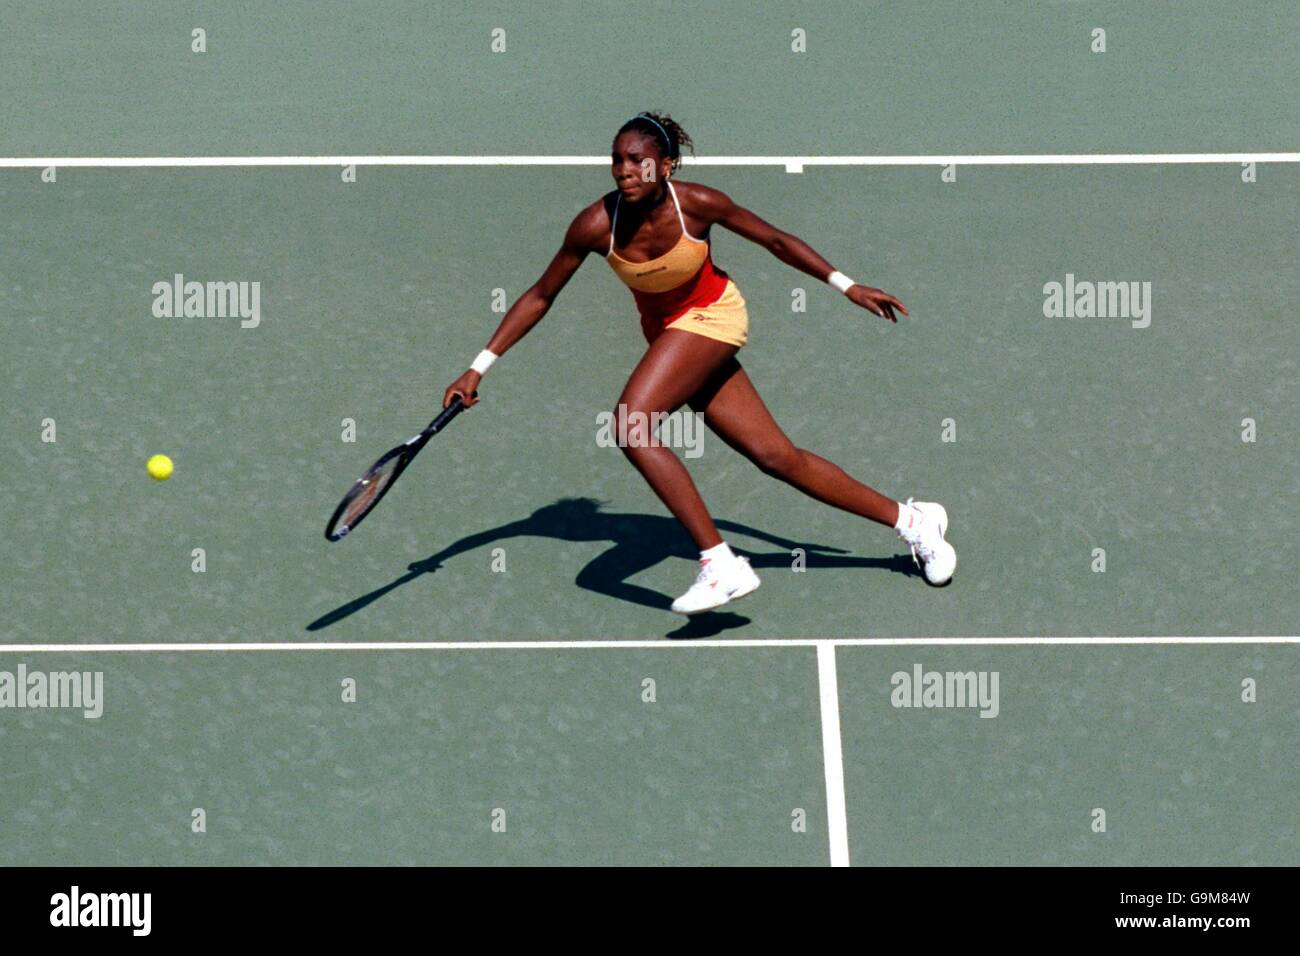 Sydney 2000 Olympics - Tennis - Women's Singles Second Round - Venus Williams v Tamarine Tanasugarn Stock Photo